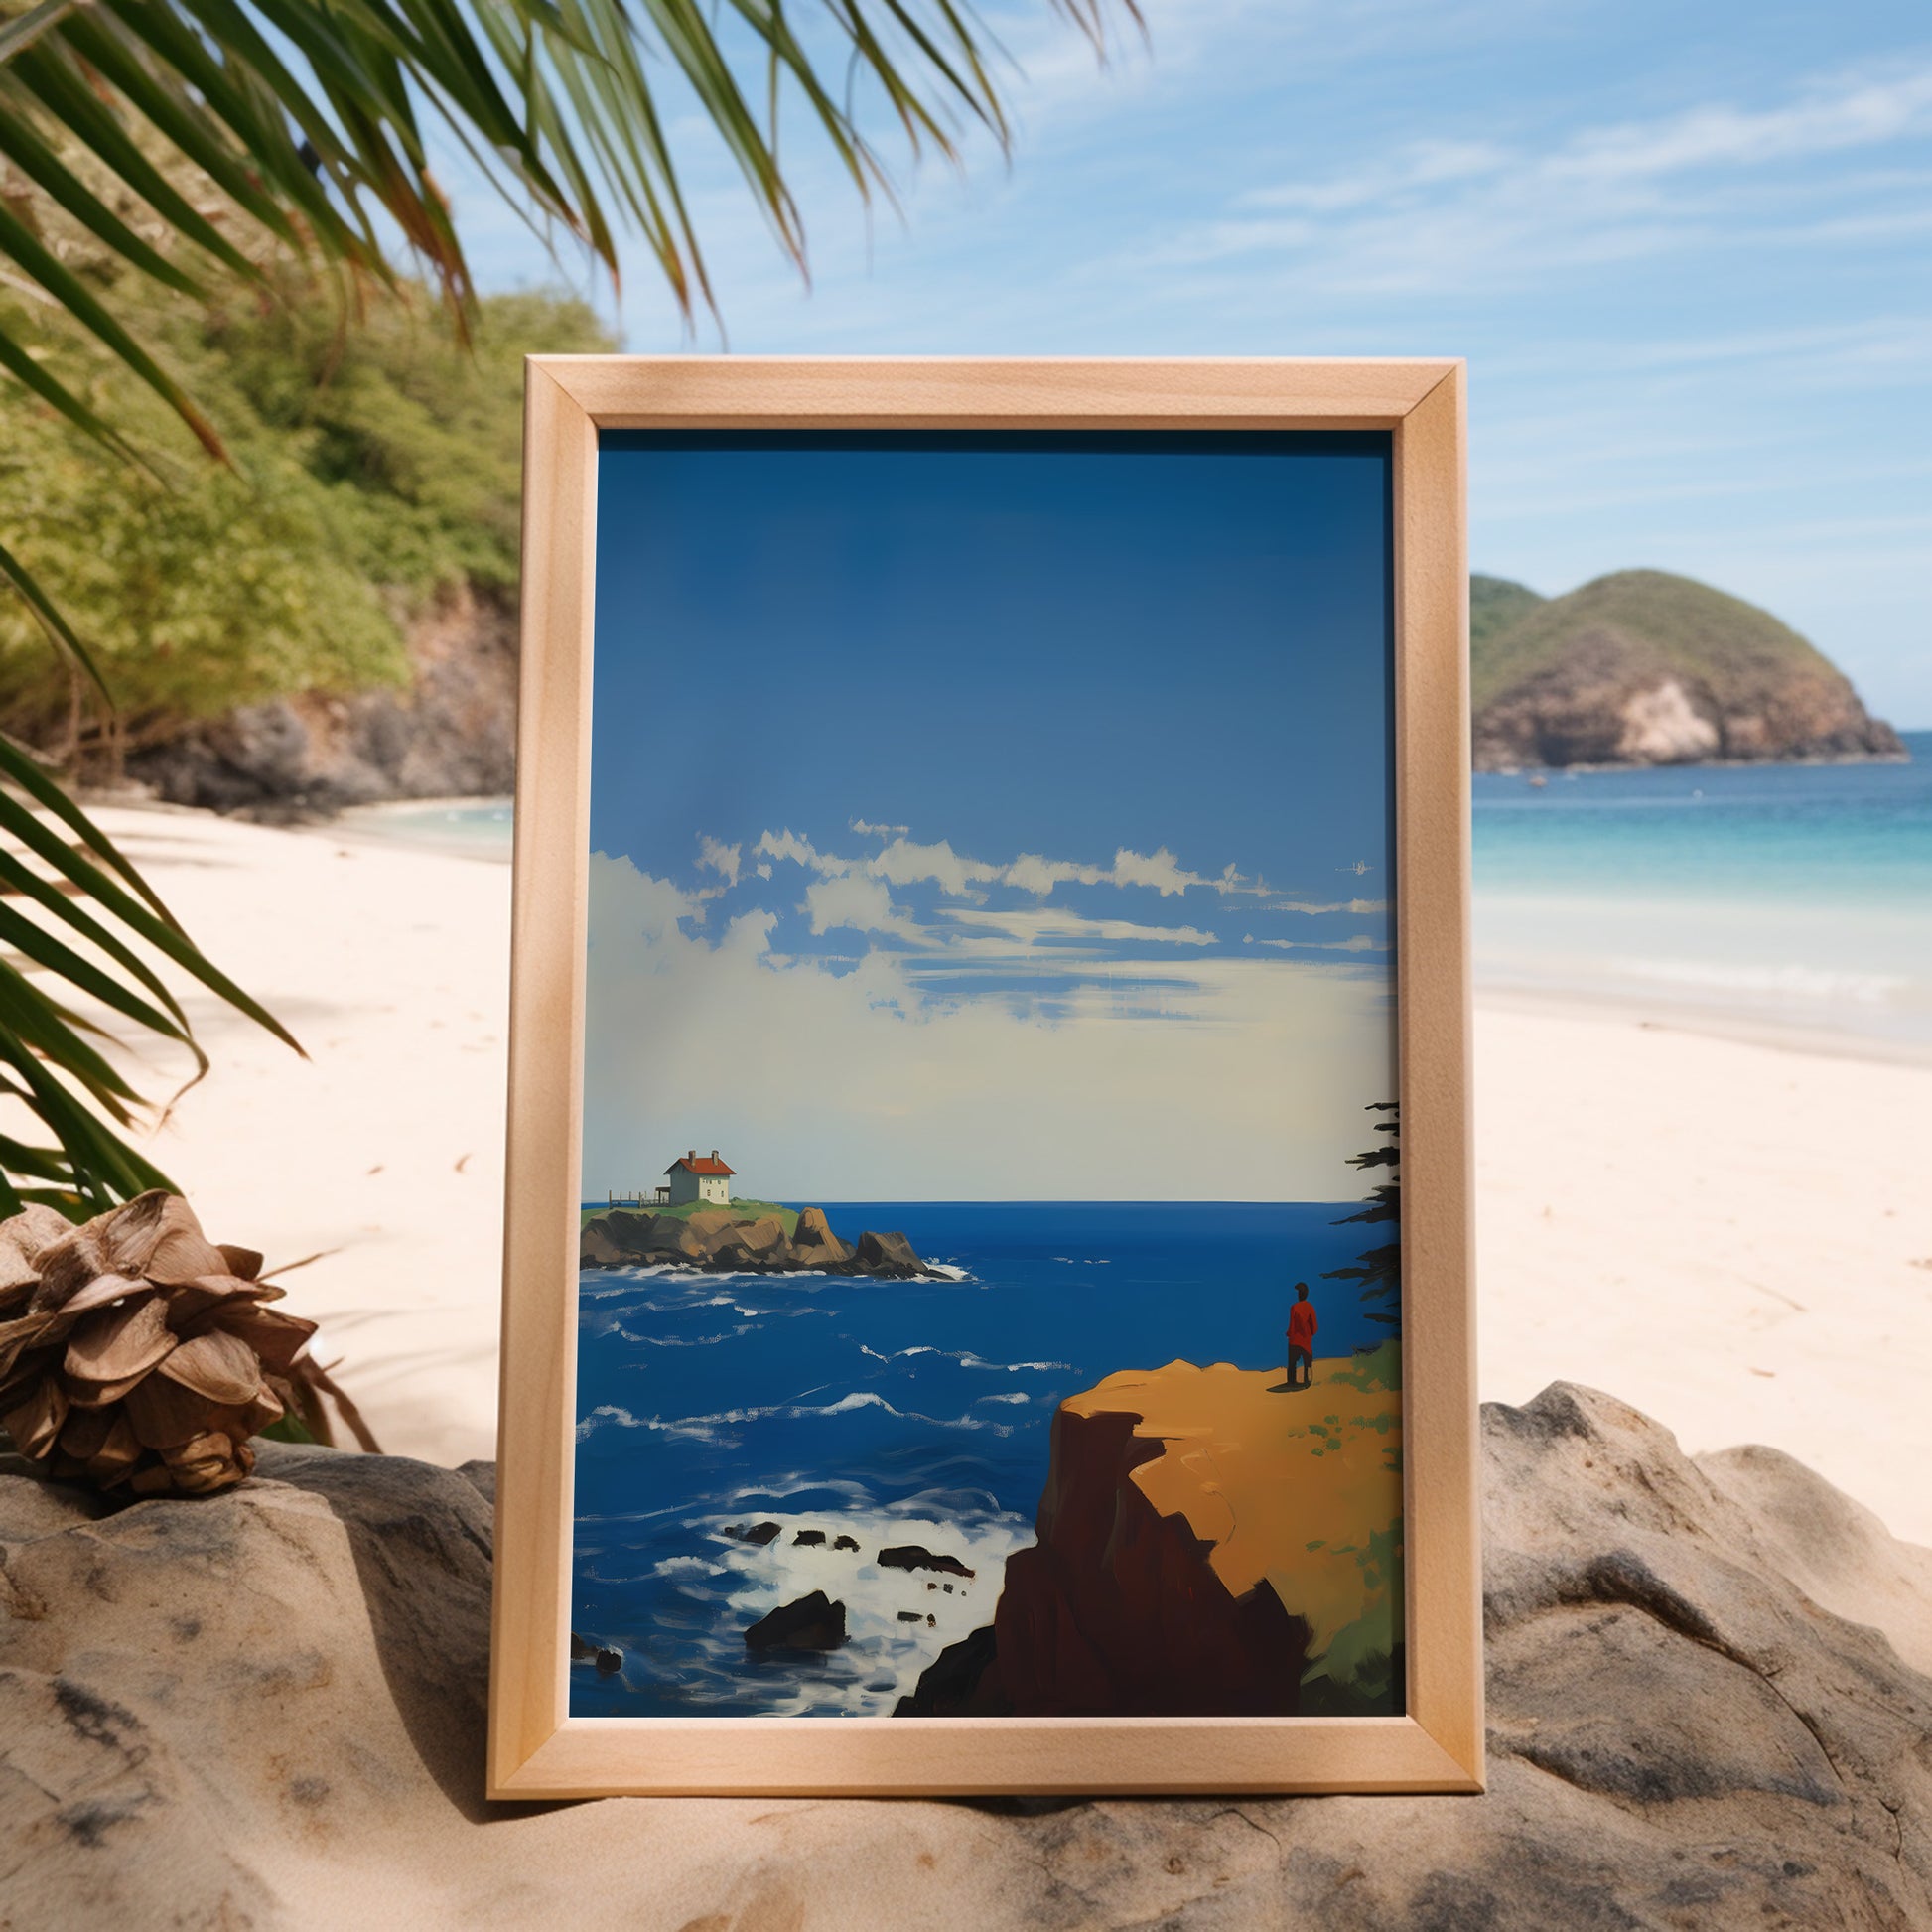 A framed picture of a coastal landscape with a lighthouse, set on a sandy beach.